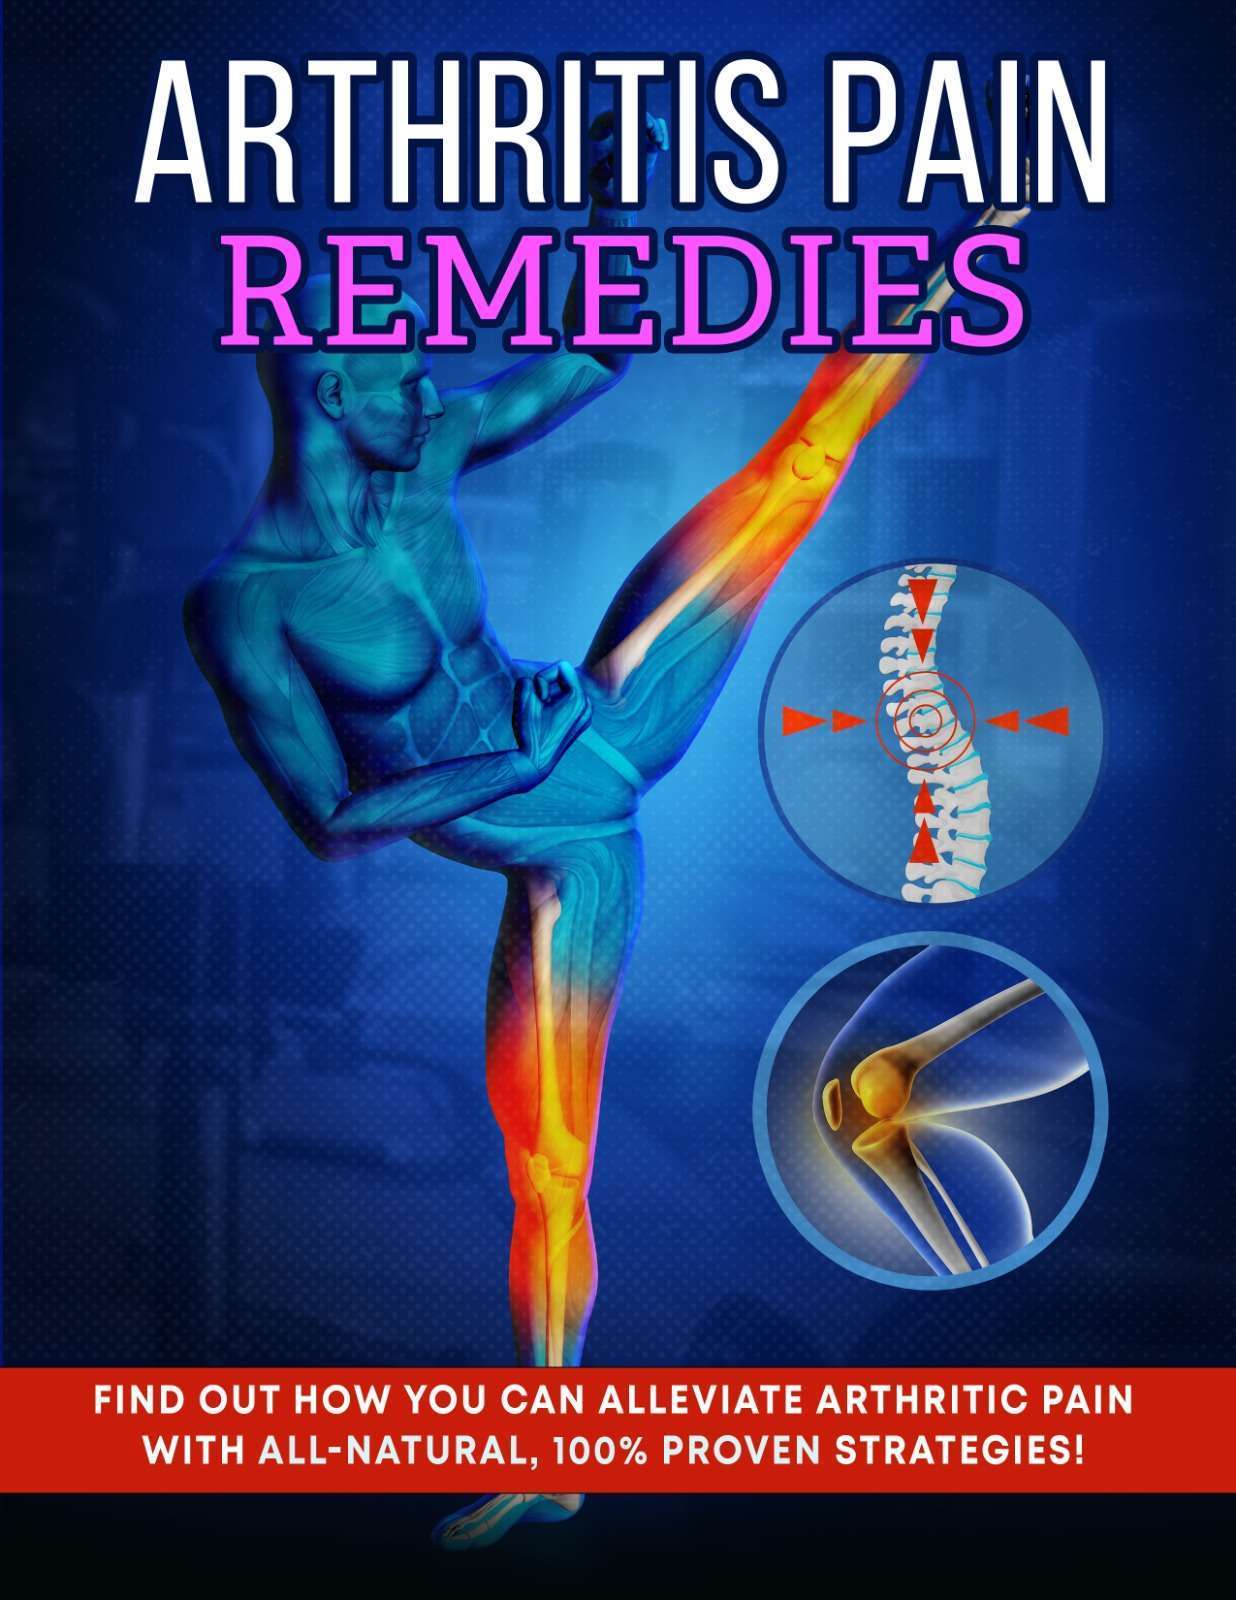 Arthritis pain remedies